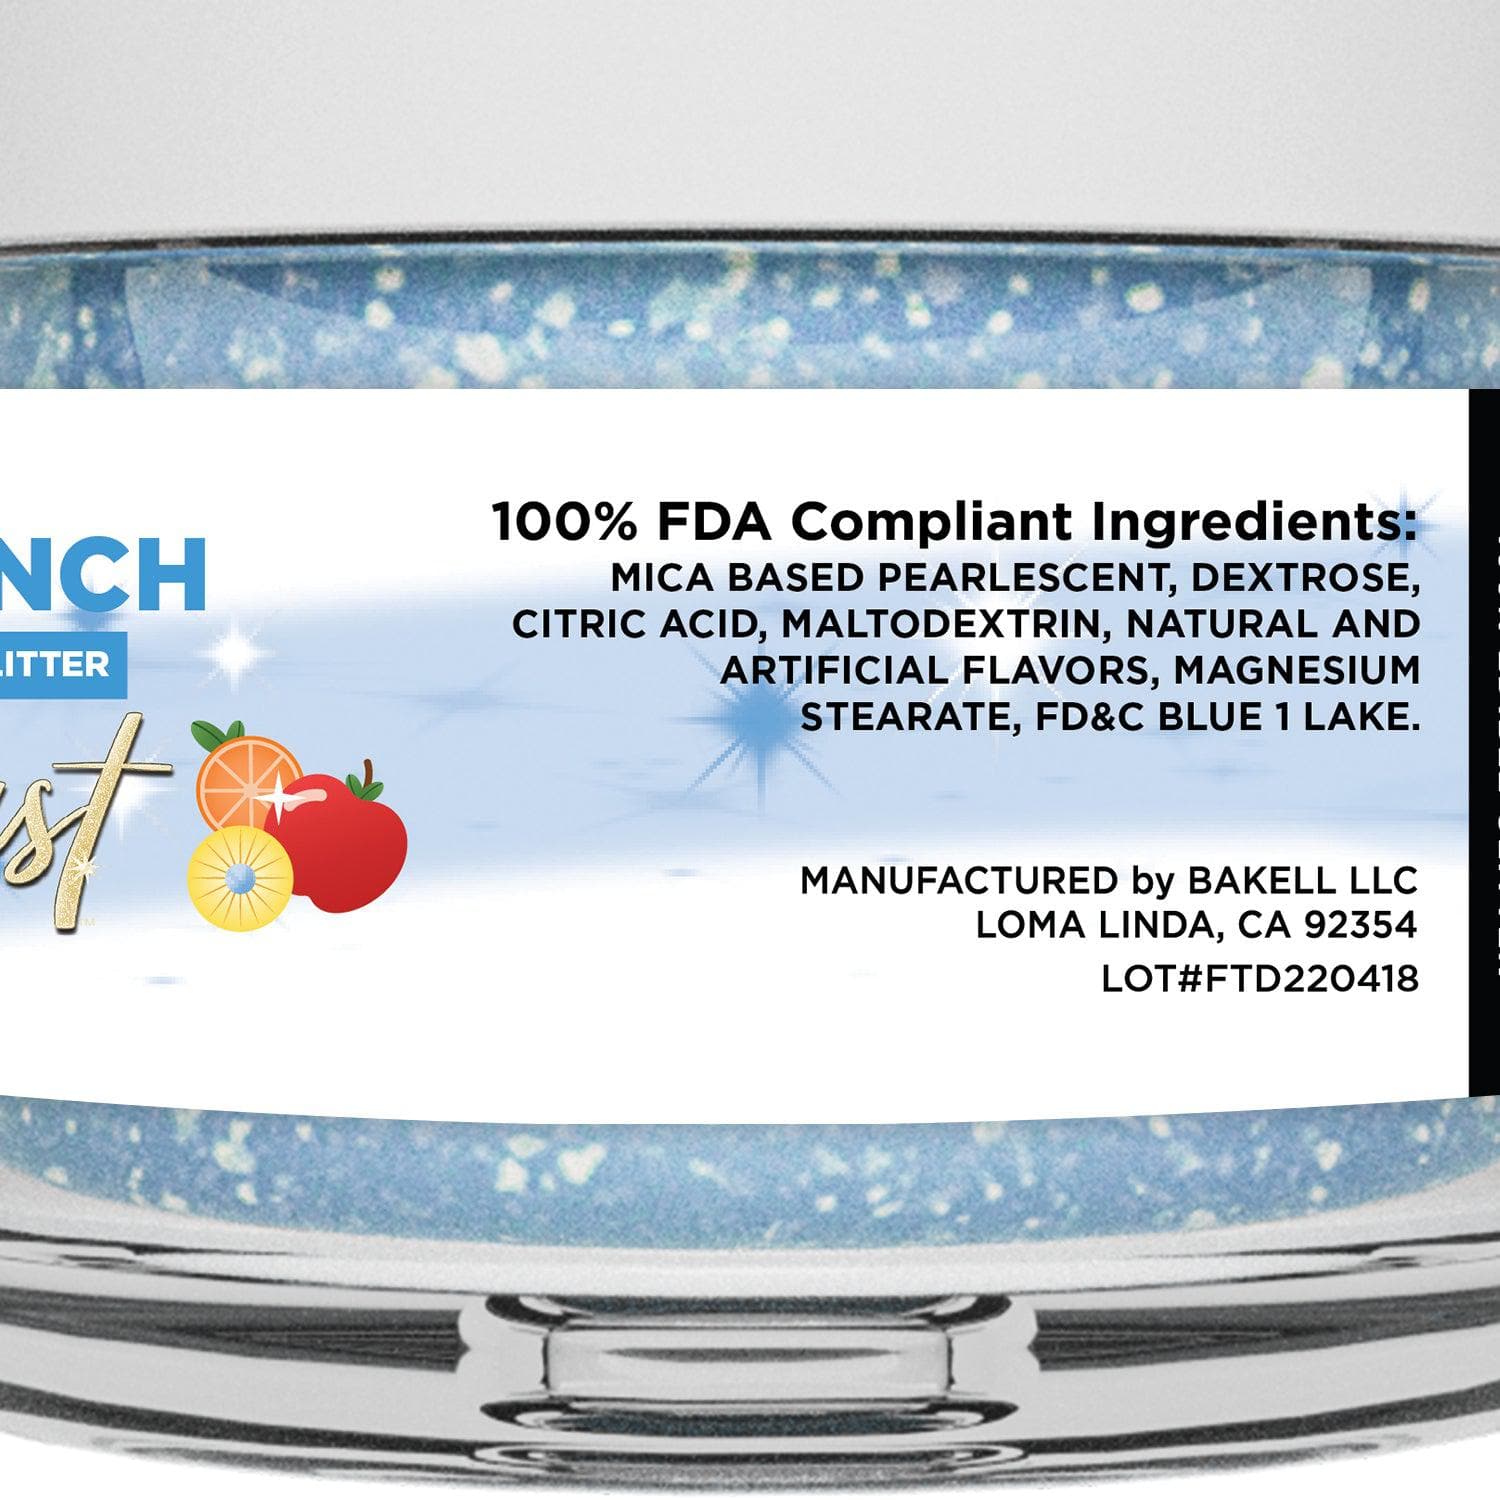 Sour Fruit Punch Flavored Edible Glitter | Tinker Dust | Bakell